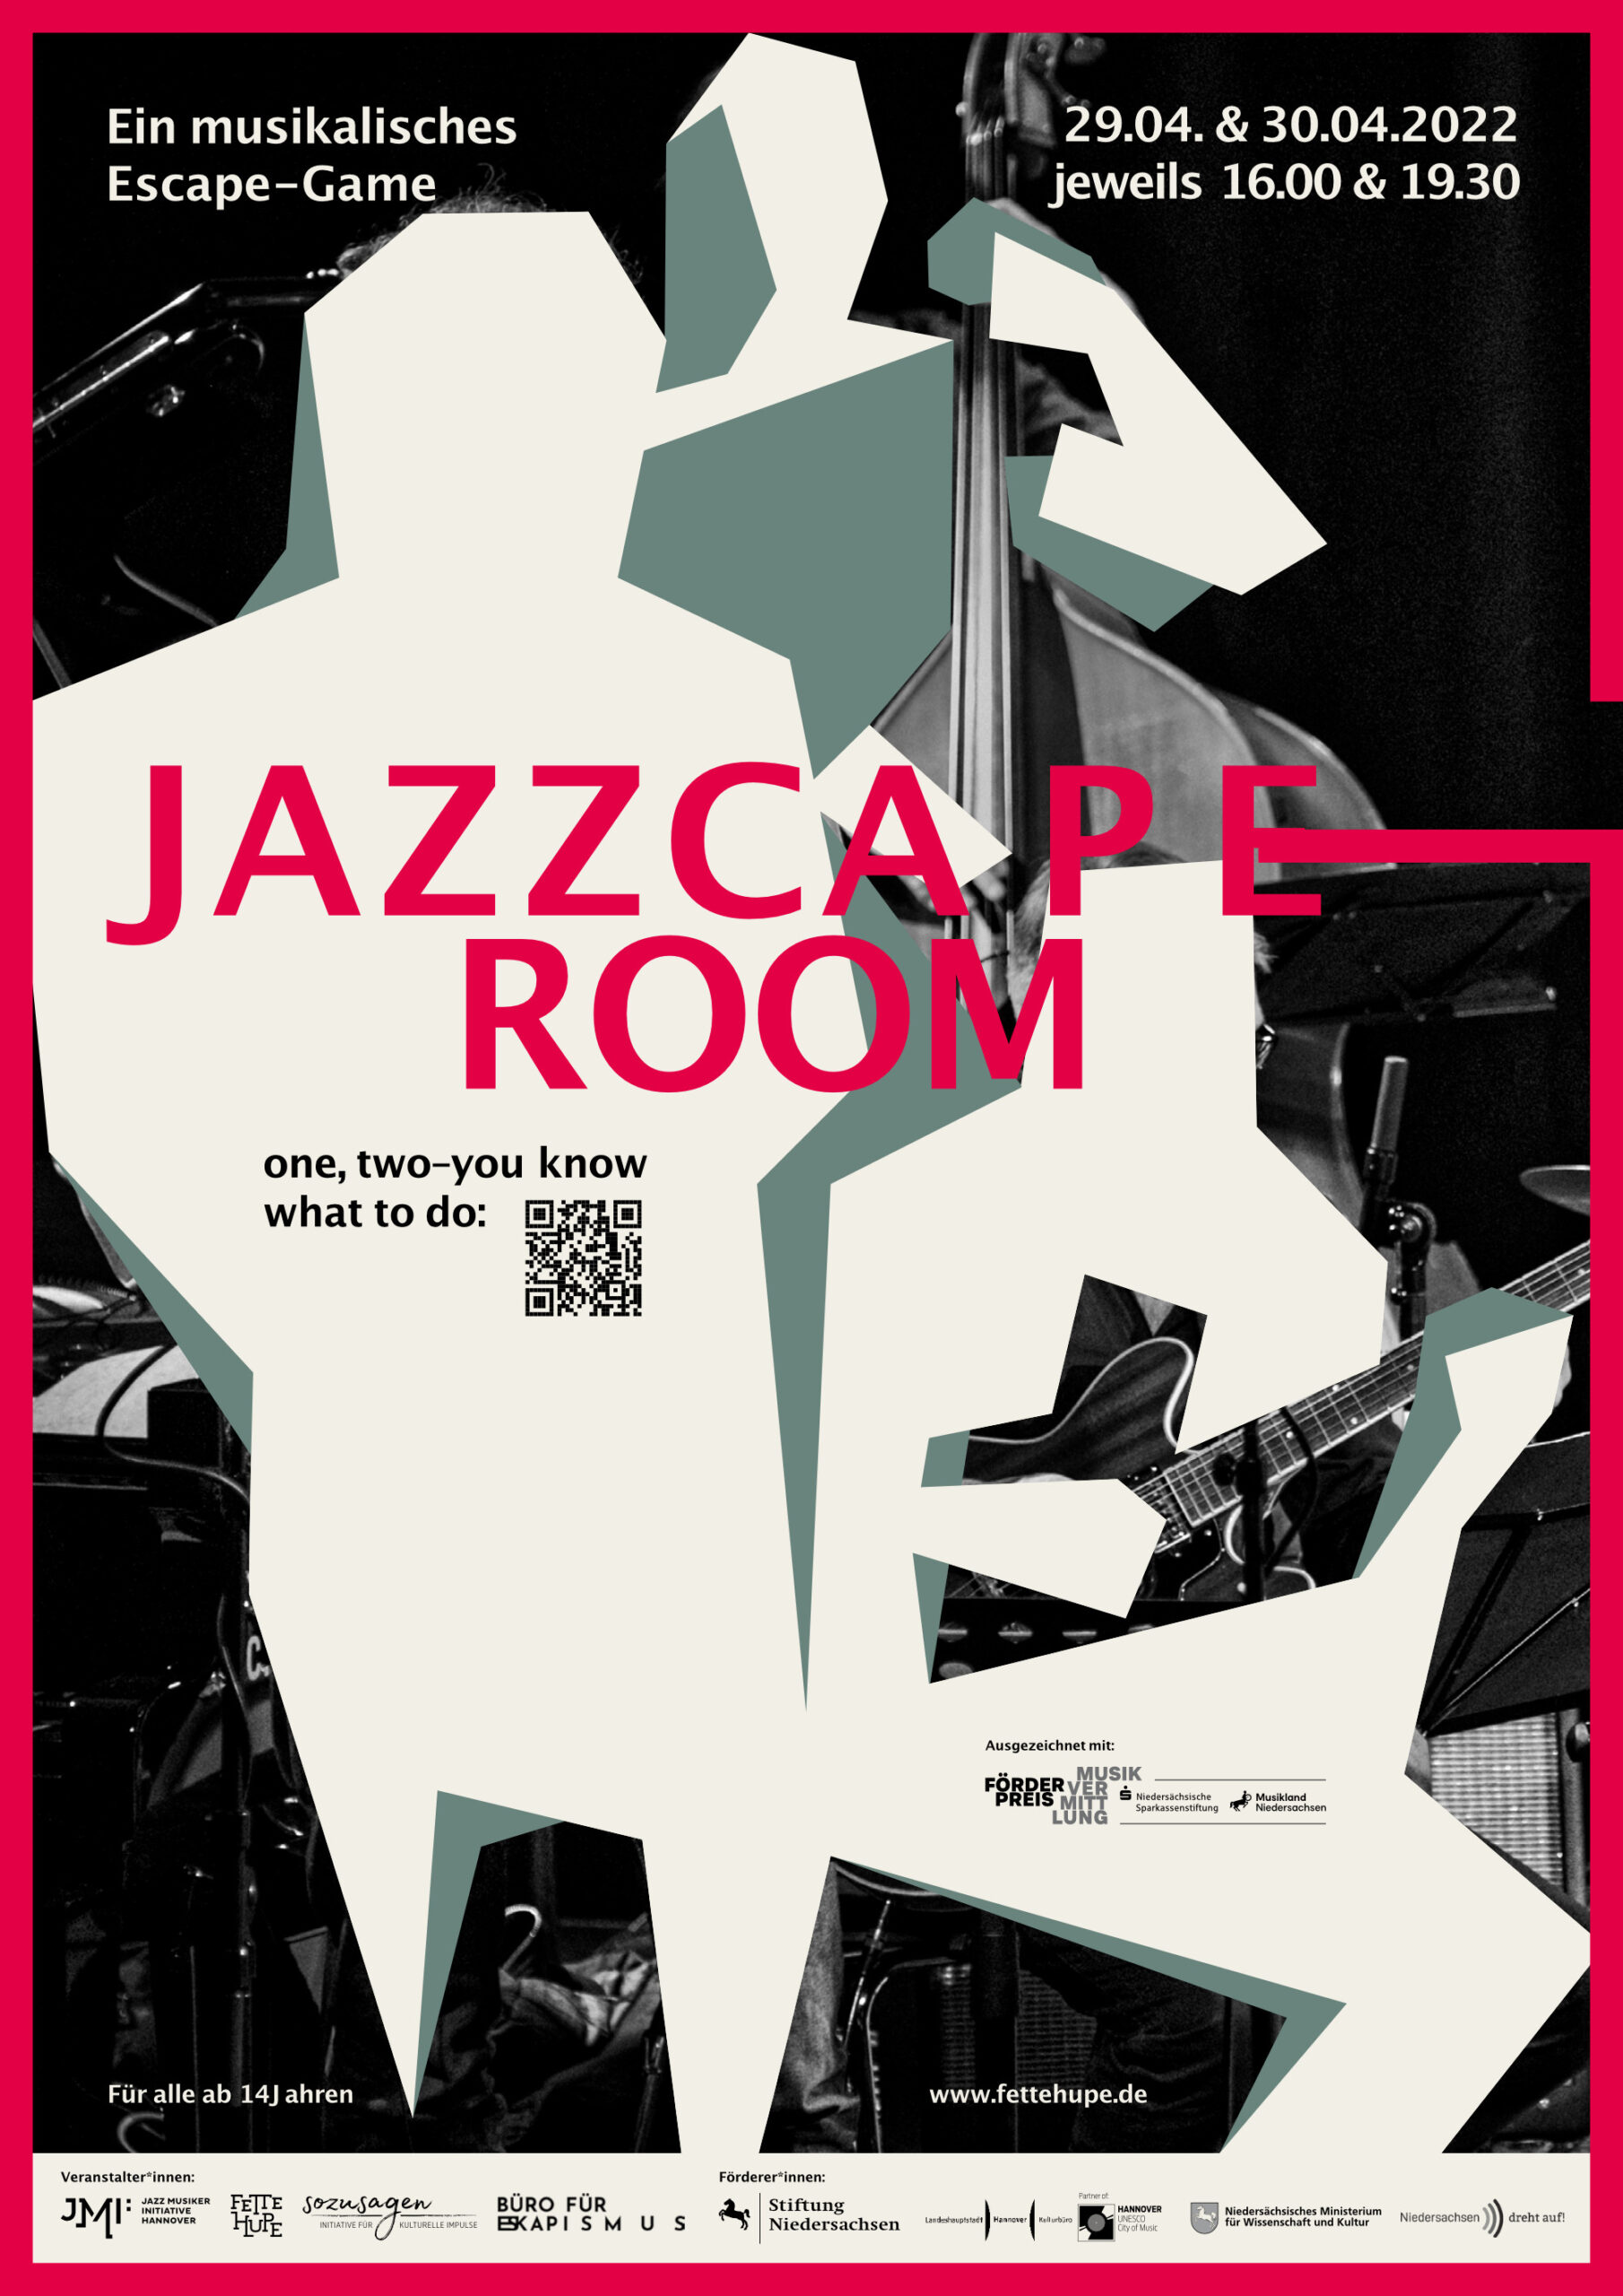 Jazzcape-Room - NSKS